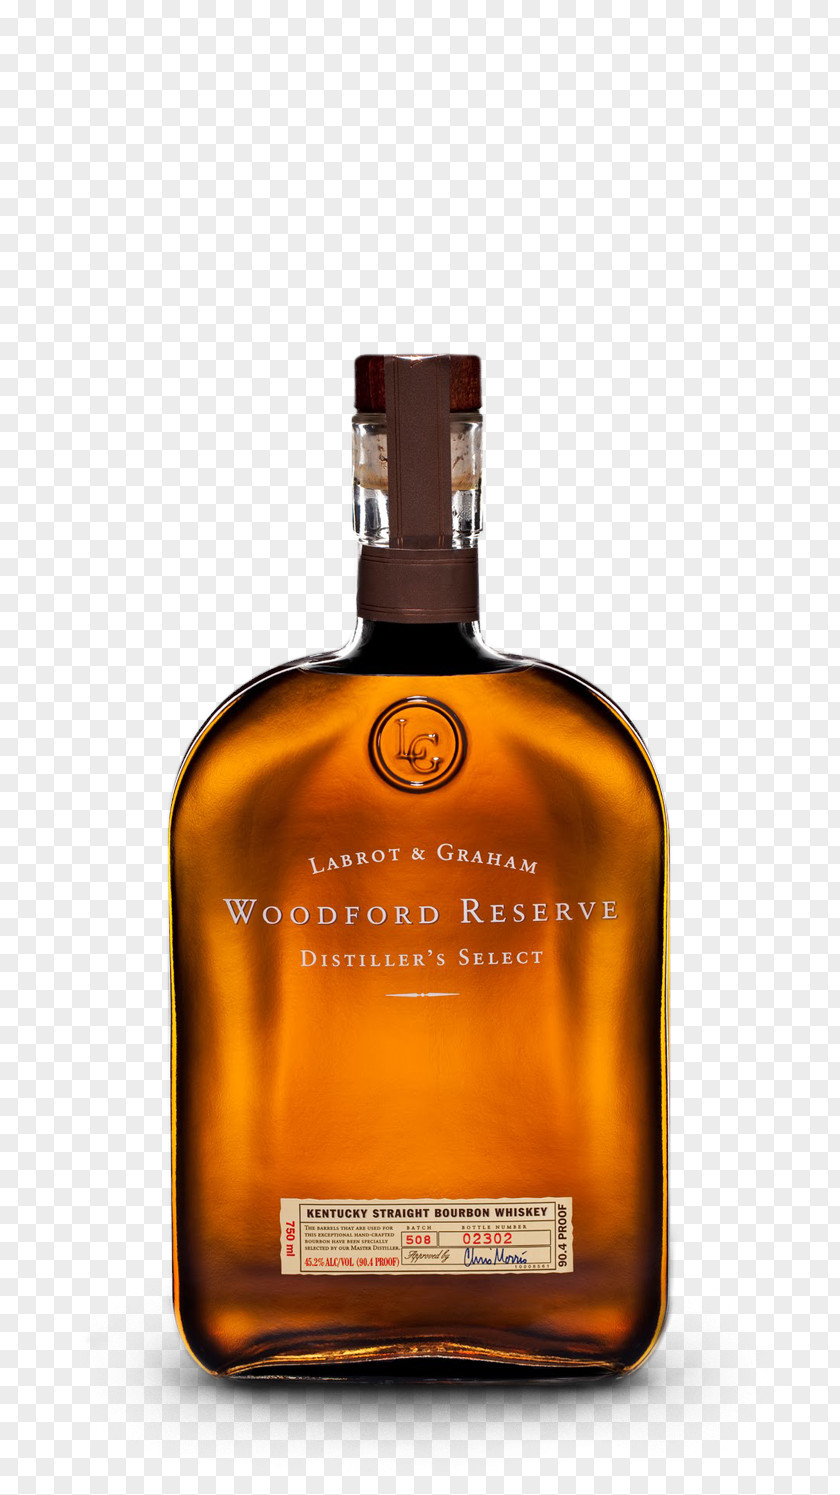 Bottle Bourbon Whiskey Rye American Distilled Beverage PNG